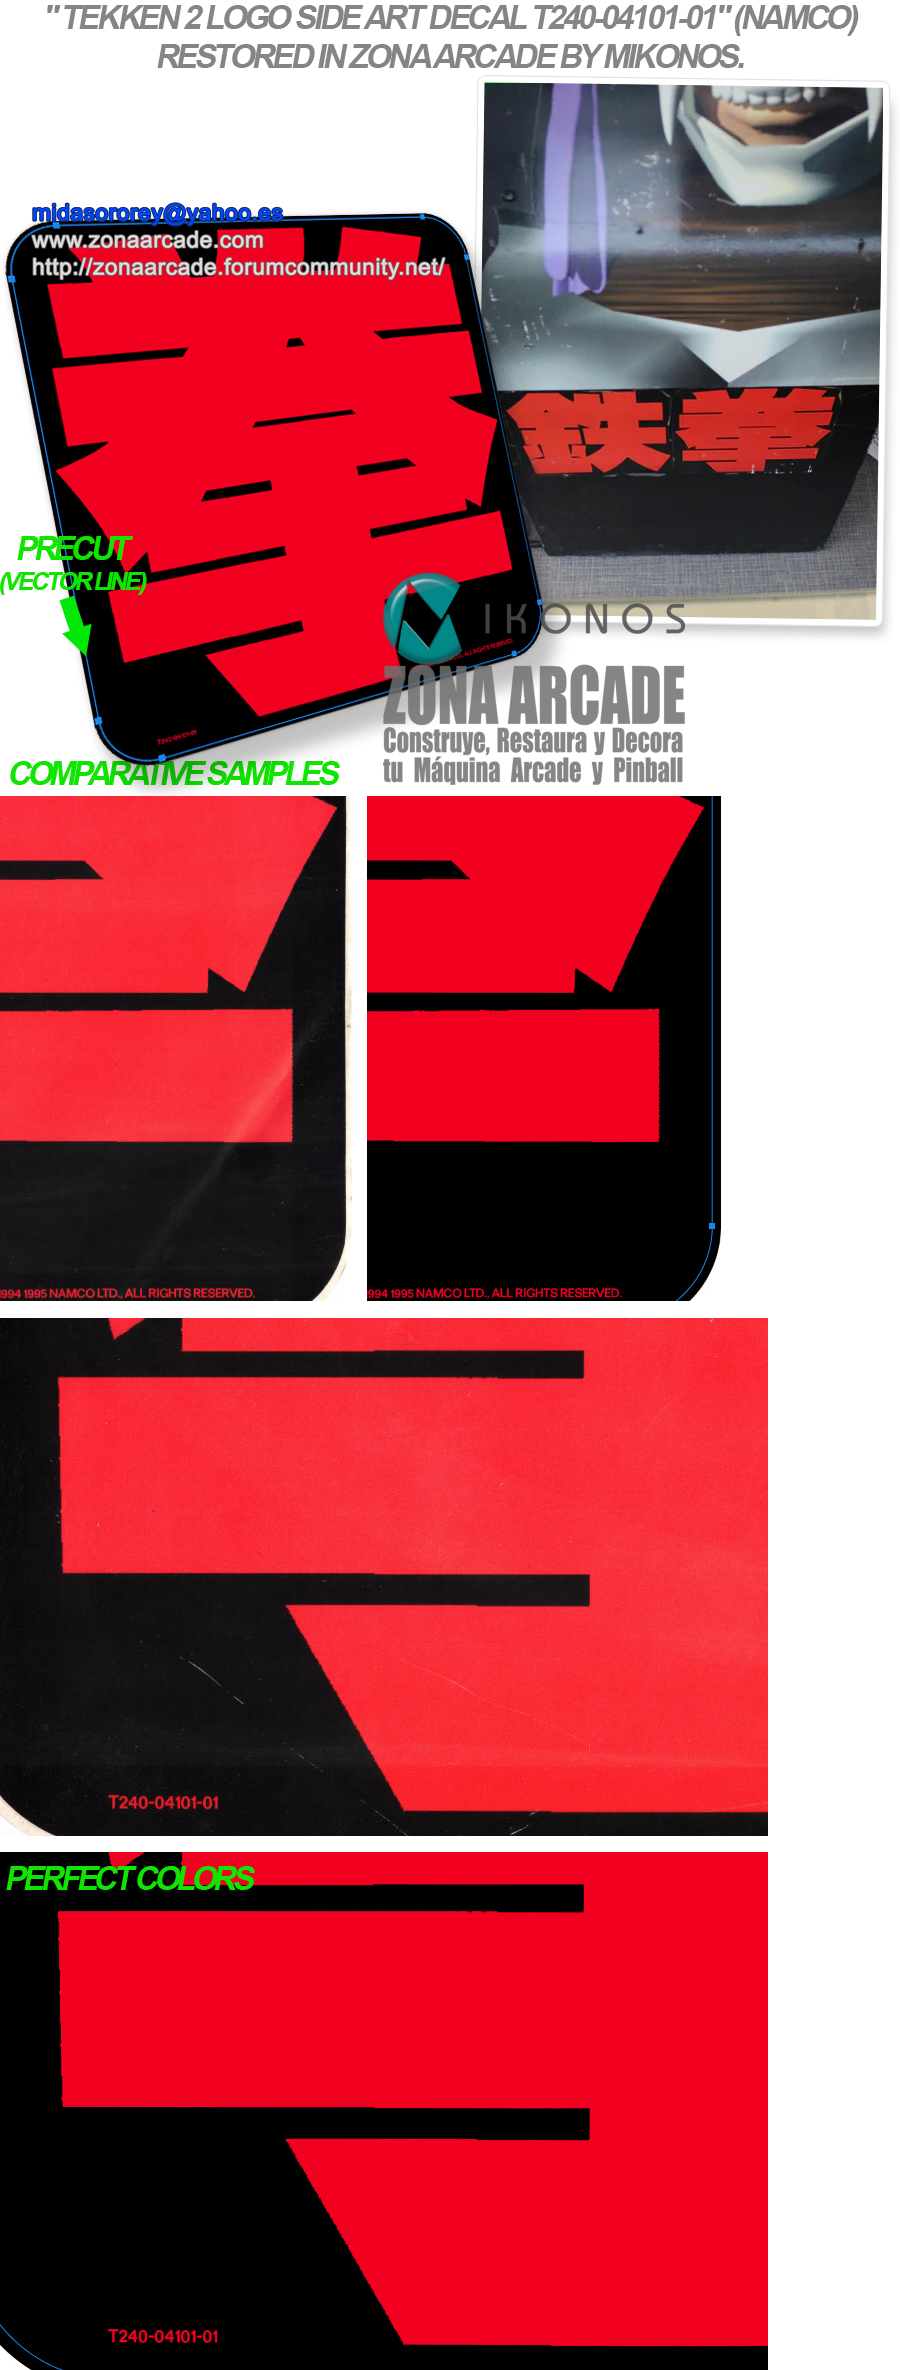 Tekken-2-Logo-Side-Art-Decal-T240-04101-01-Restored-Mikonos1